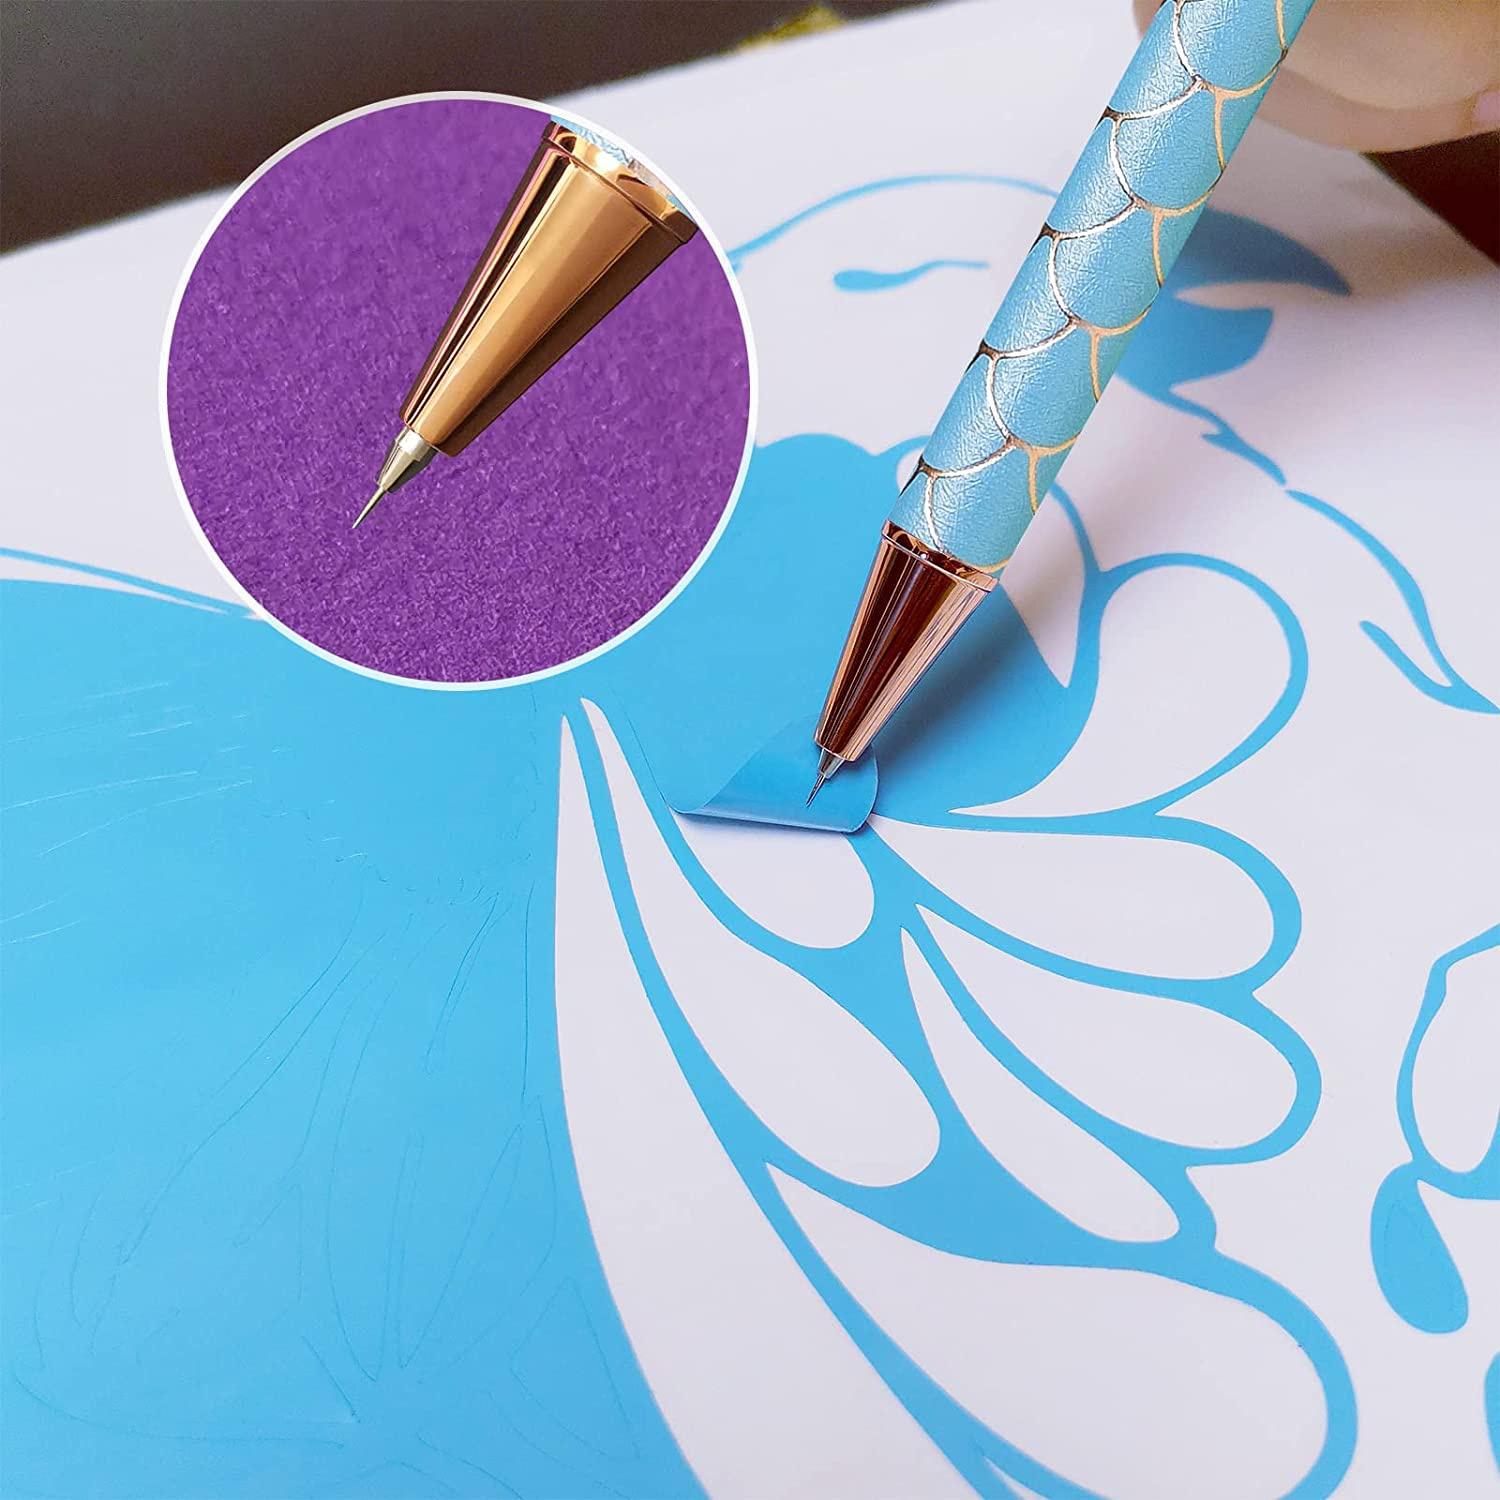 Air Release Pen Craft Weeding Pen Essential Adhesive Vinyl - Temu